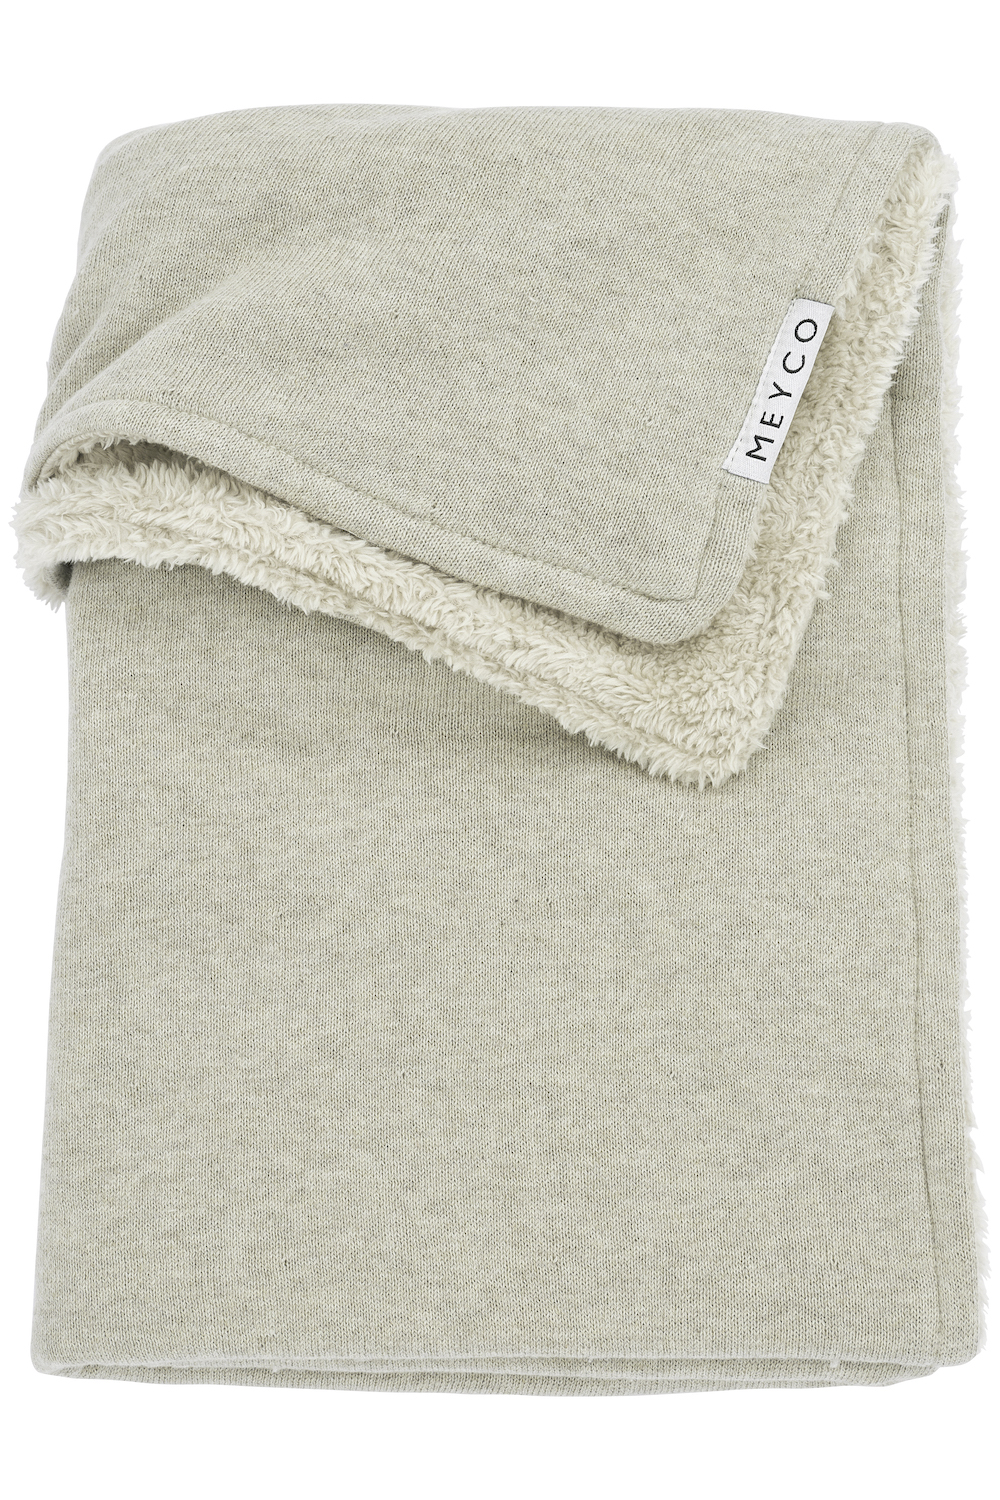 Babydecke groß Knit Basic teddy - sand melange - 100x150cm